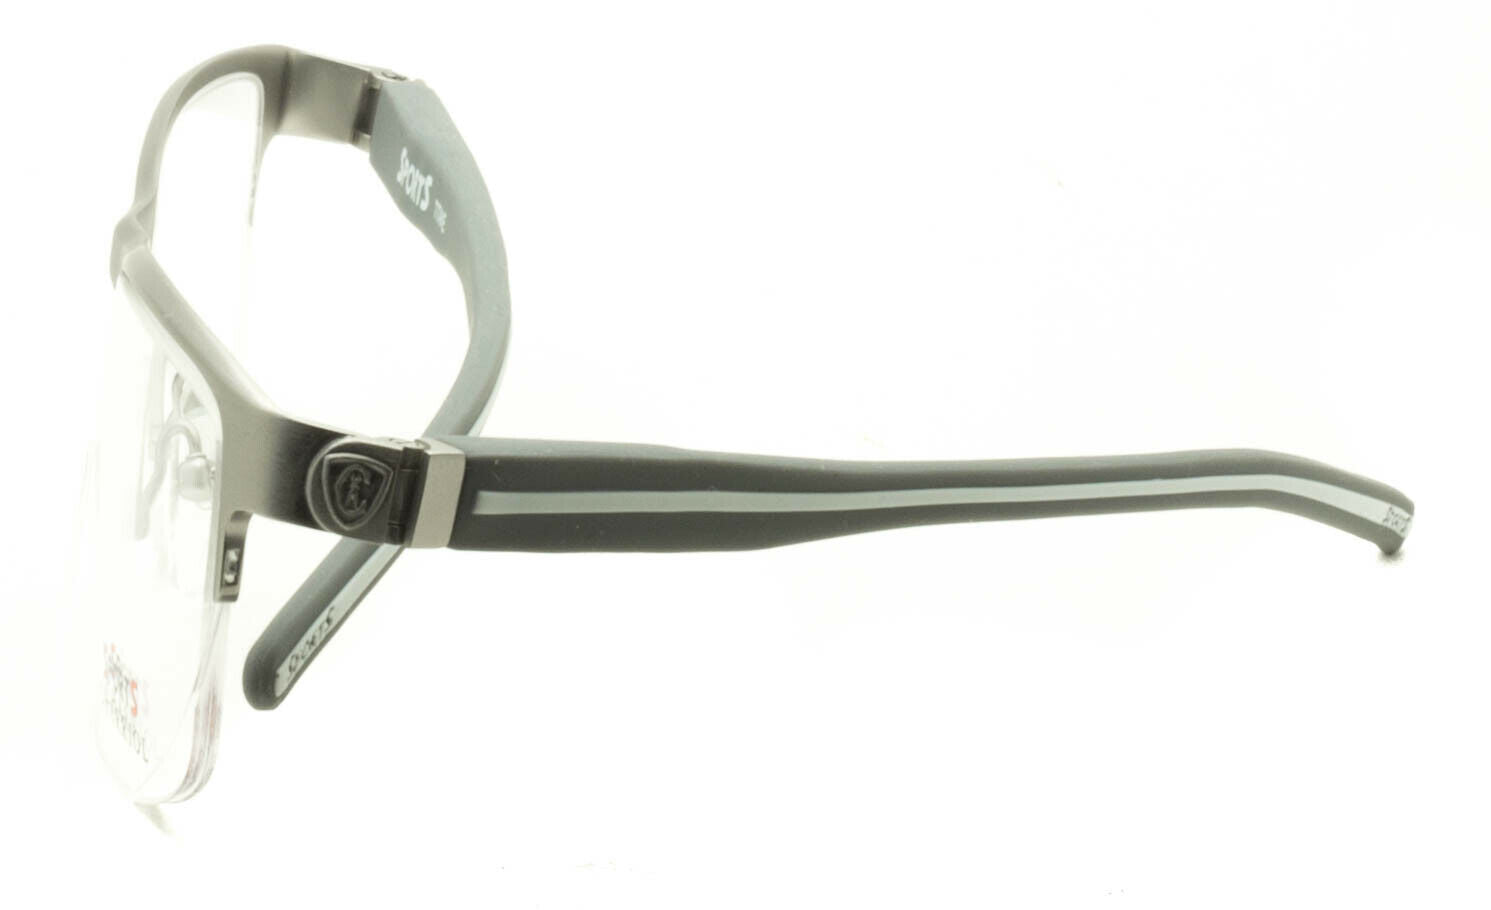 CHARRIOL SPORTS SP23052 C3 55mm FRAMES Glasses RX Optical Eyewear France - New